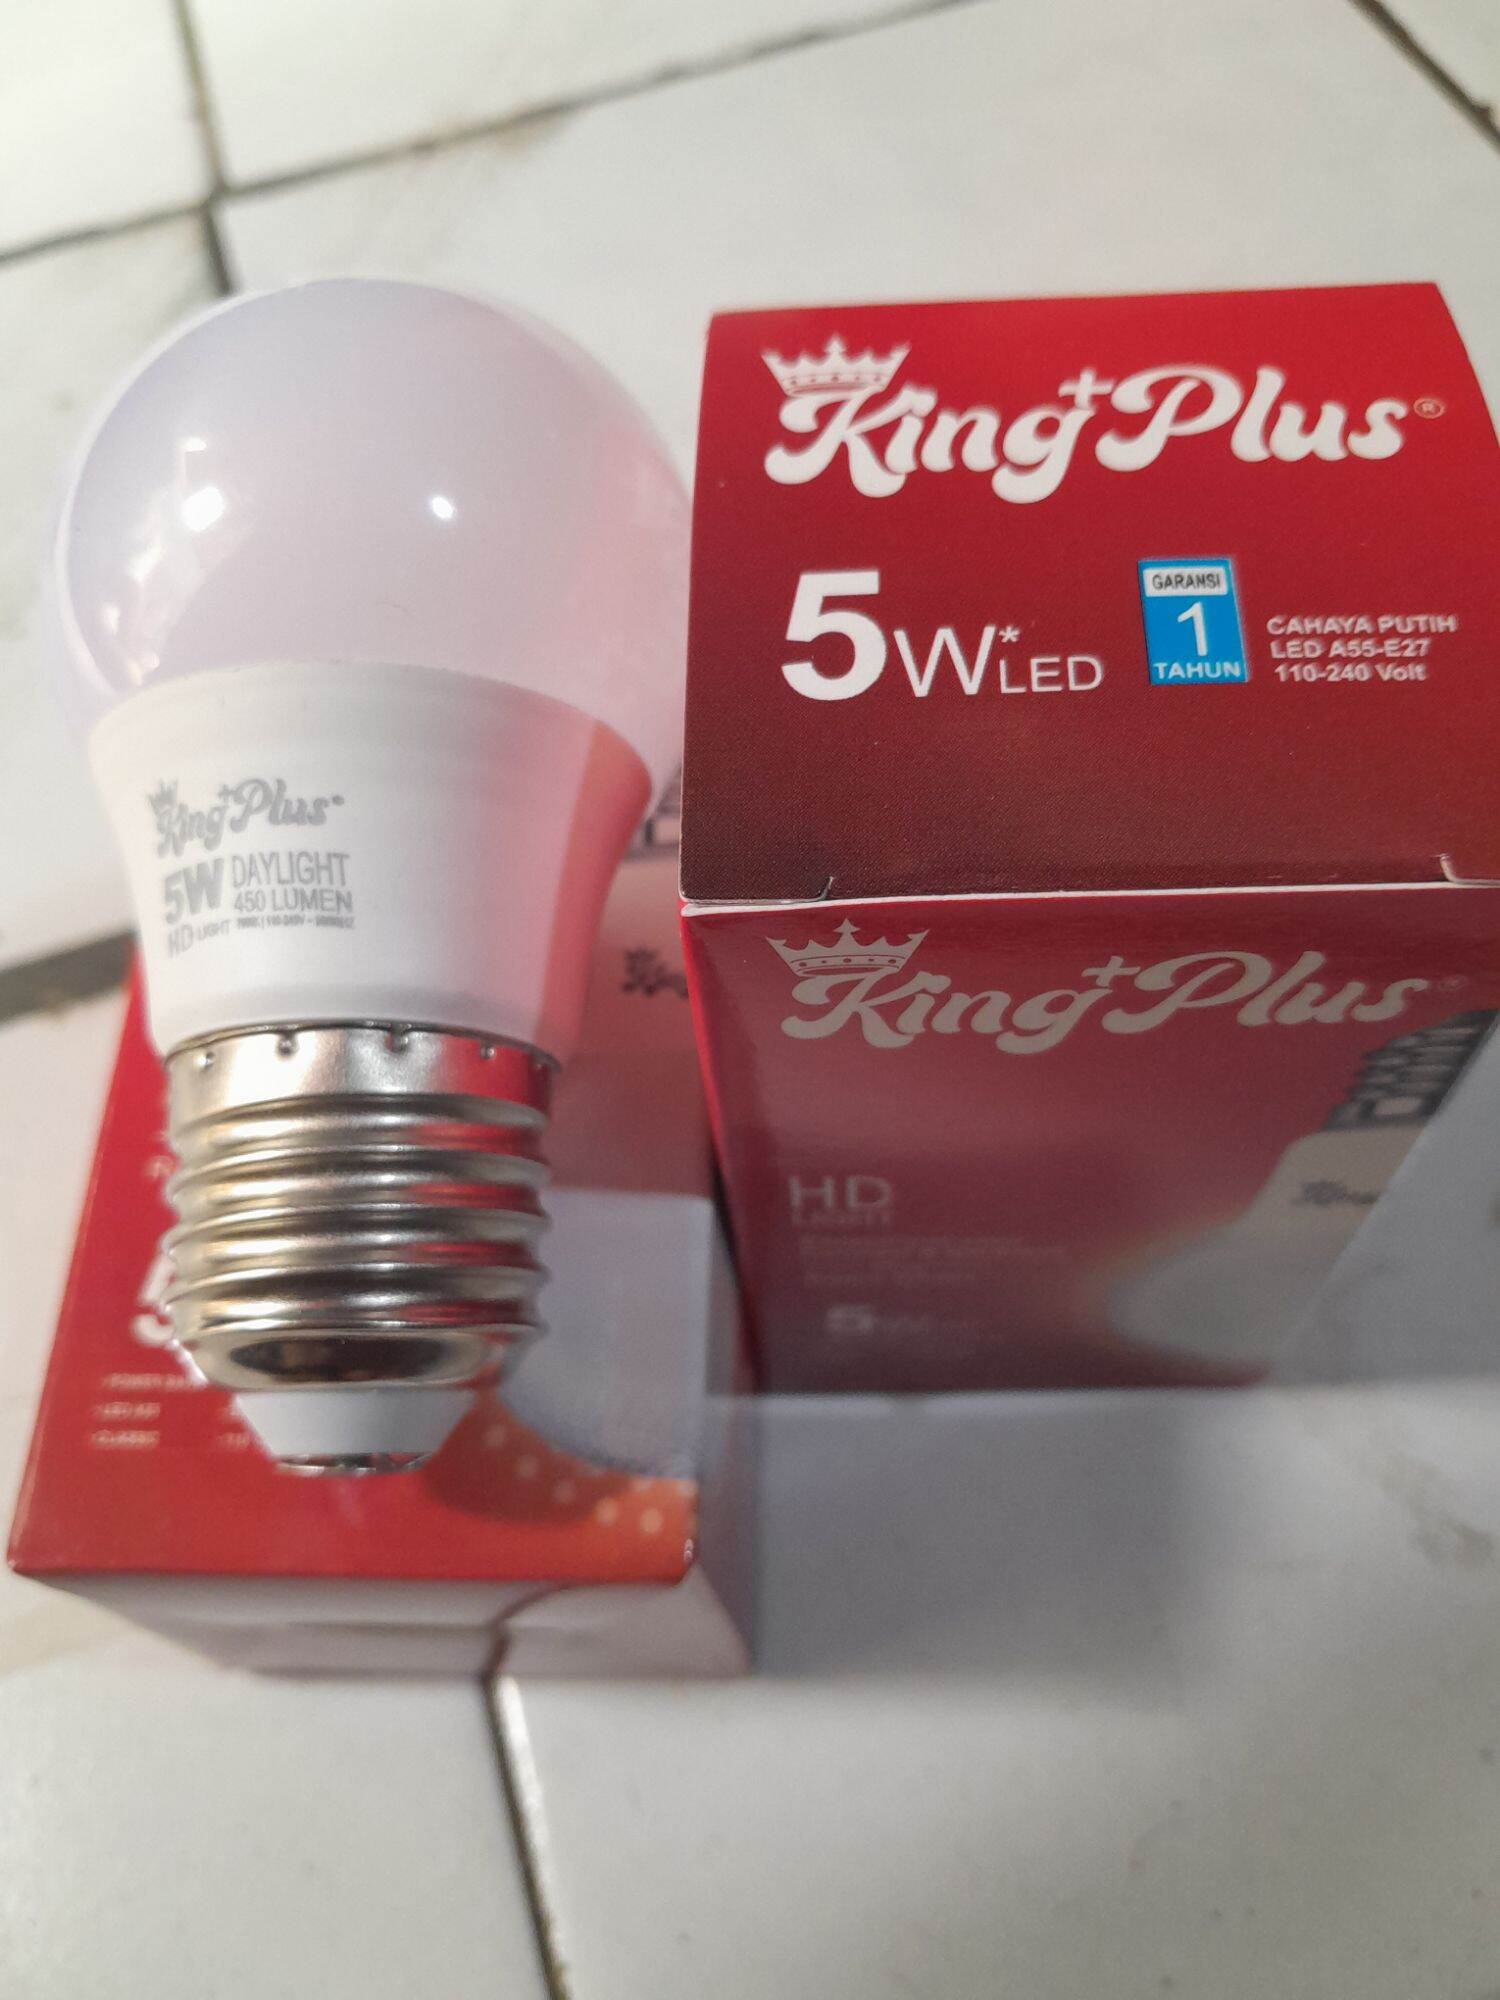 angivet narre F.Kr. lampu led bulb king+plus | Lazada Indonesia